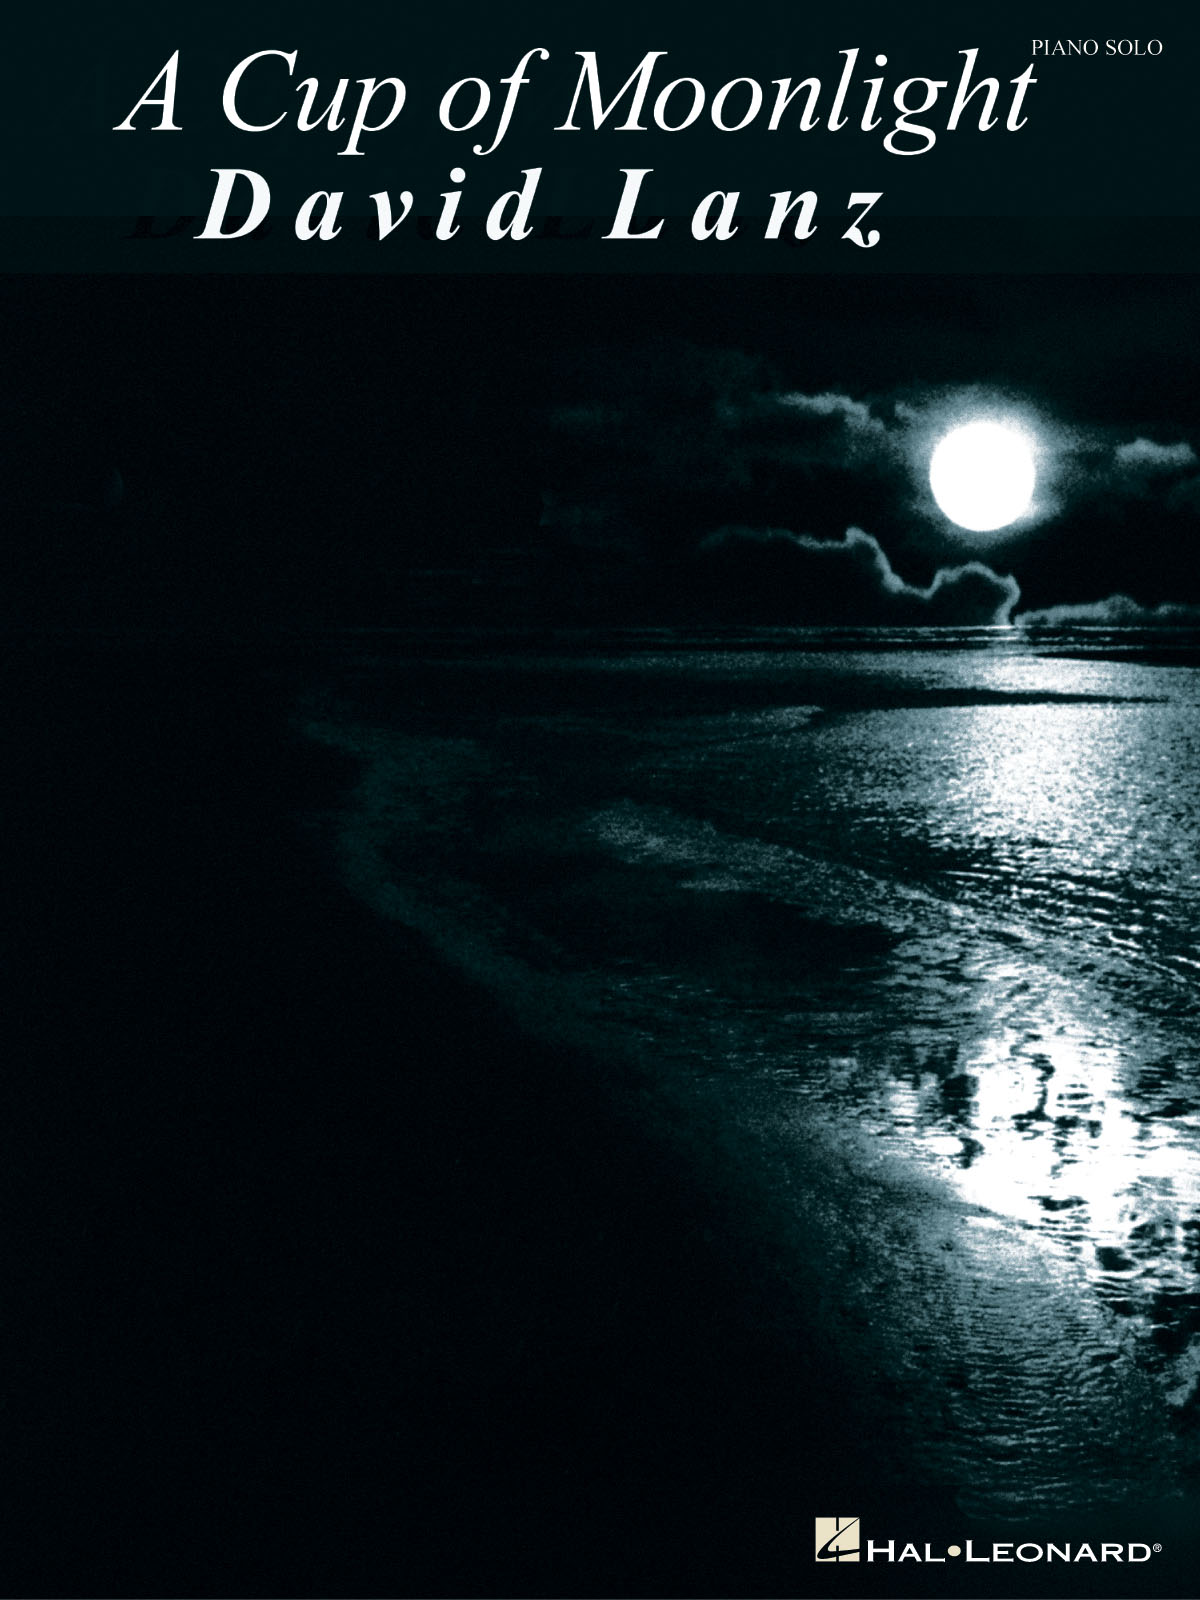 David Lanz – A Cup of Moonlight